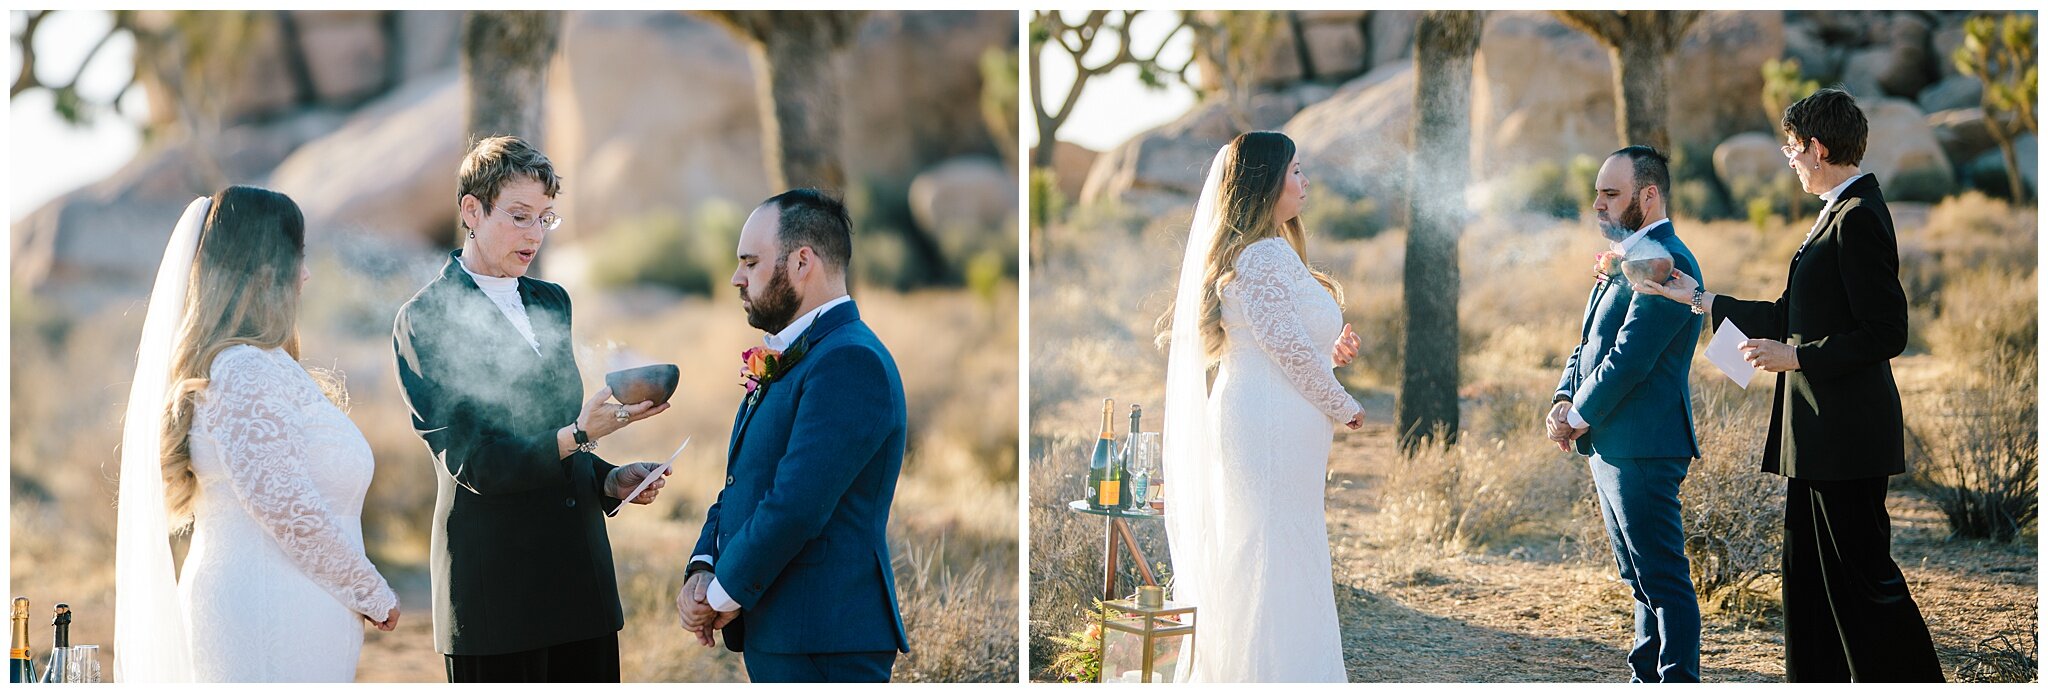 Joshua Tree Elopement - Michelle and Michael - Adventure Wedding Photographer_0027.jpg